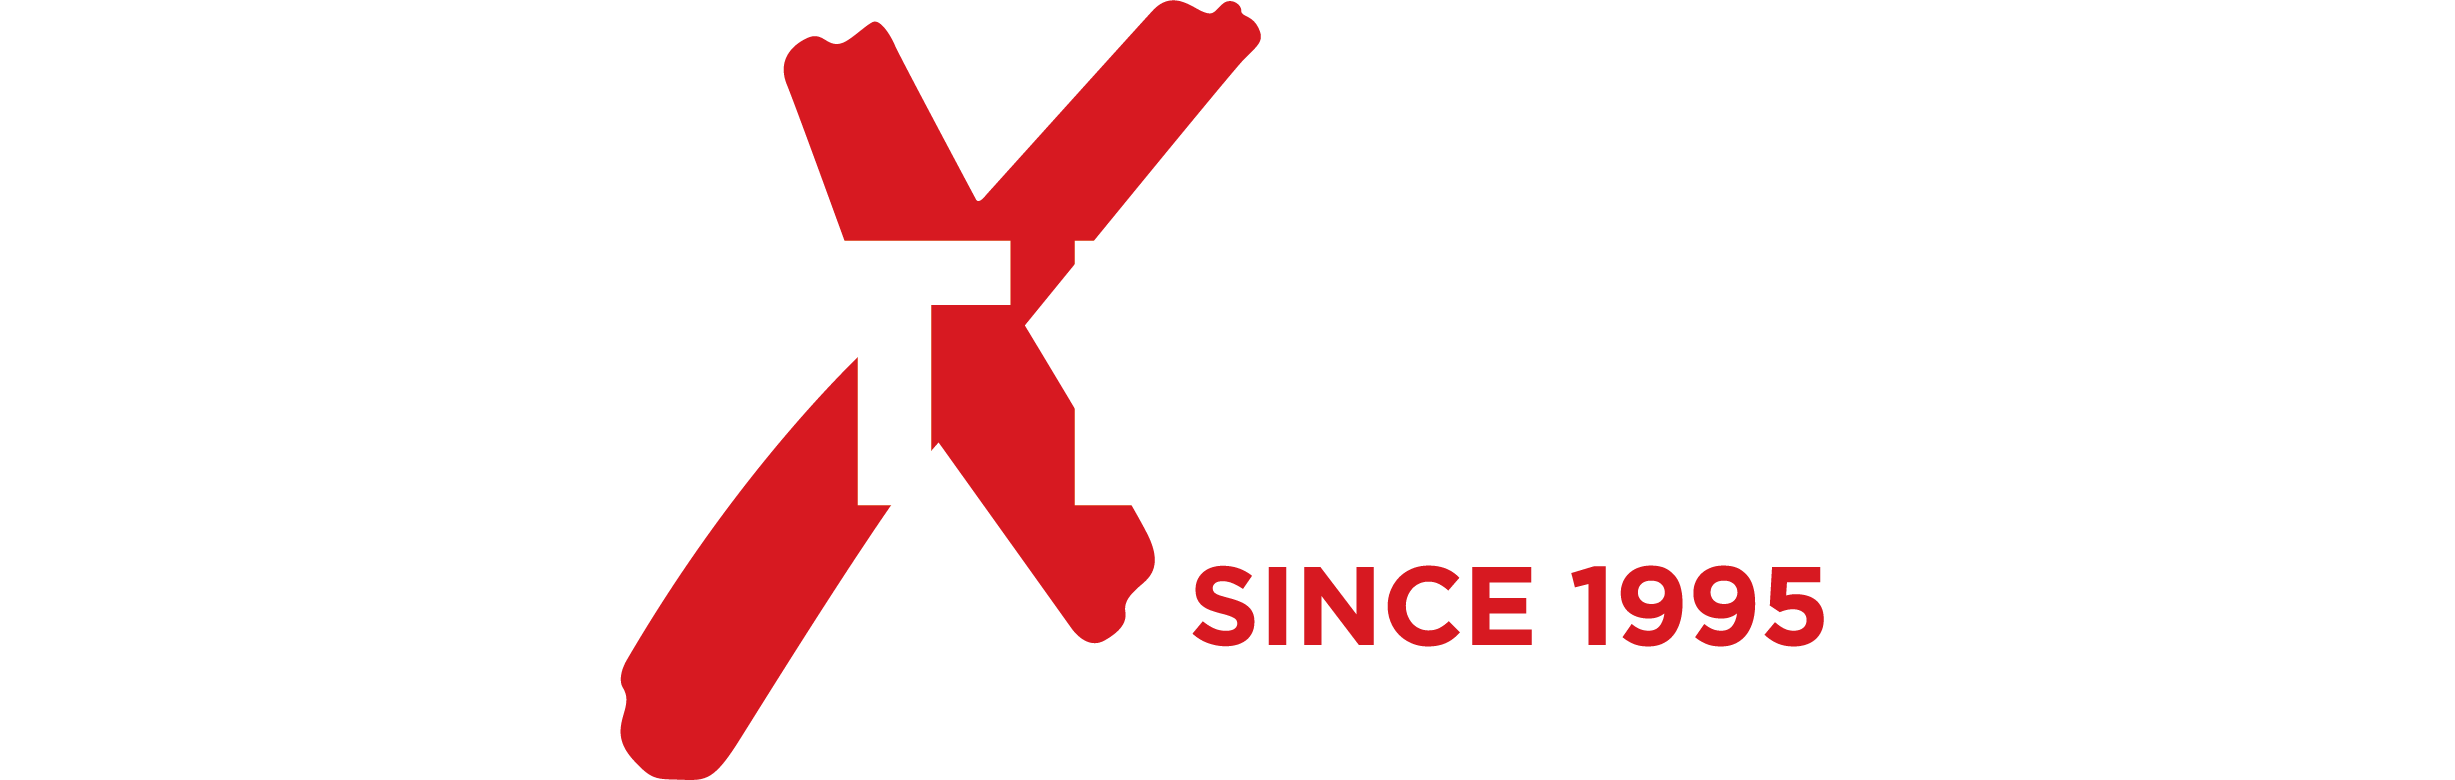 Rustblock logo